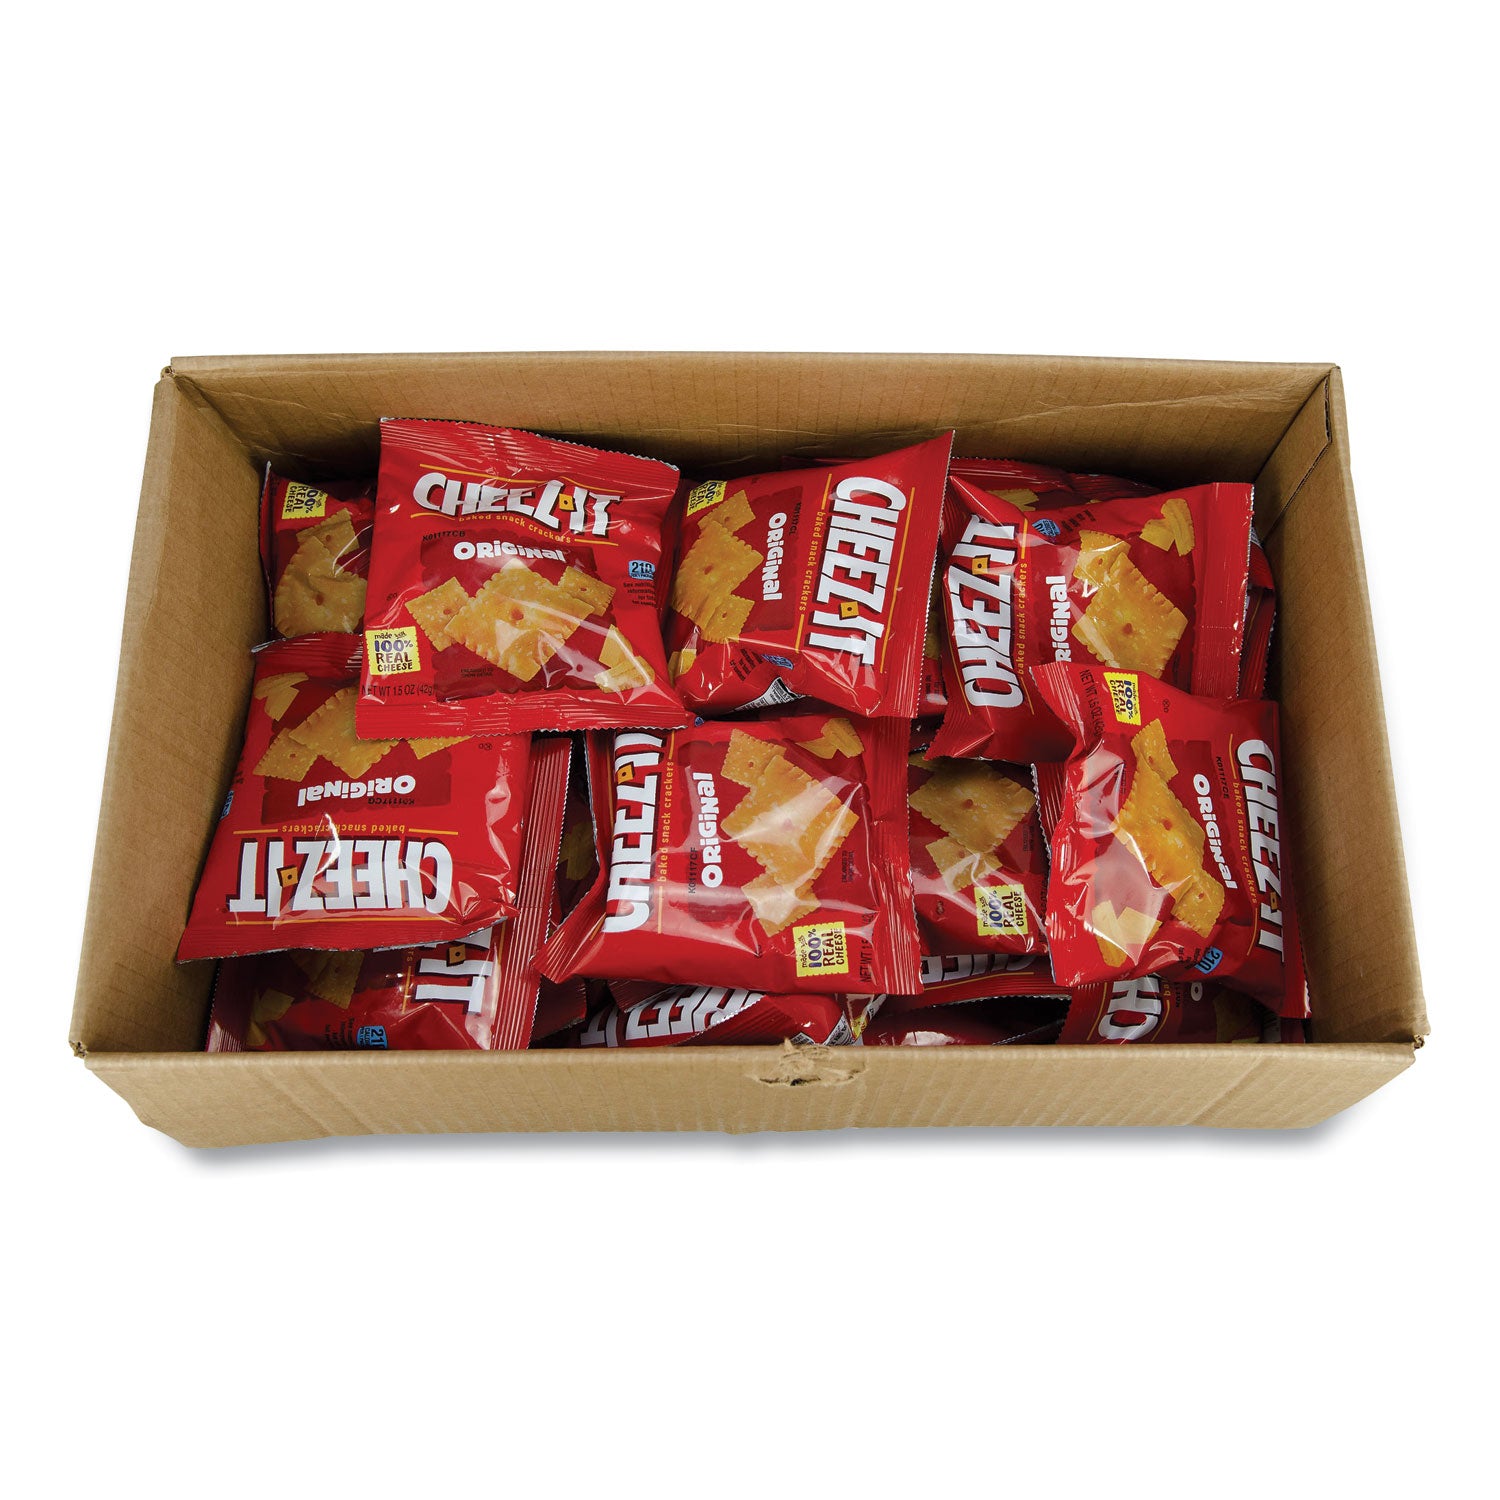 baked-snack-crackers-15-oz-bag-60-carton_kebsub12261 - 2